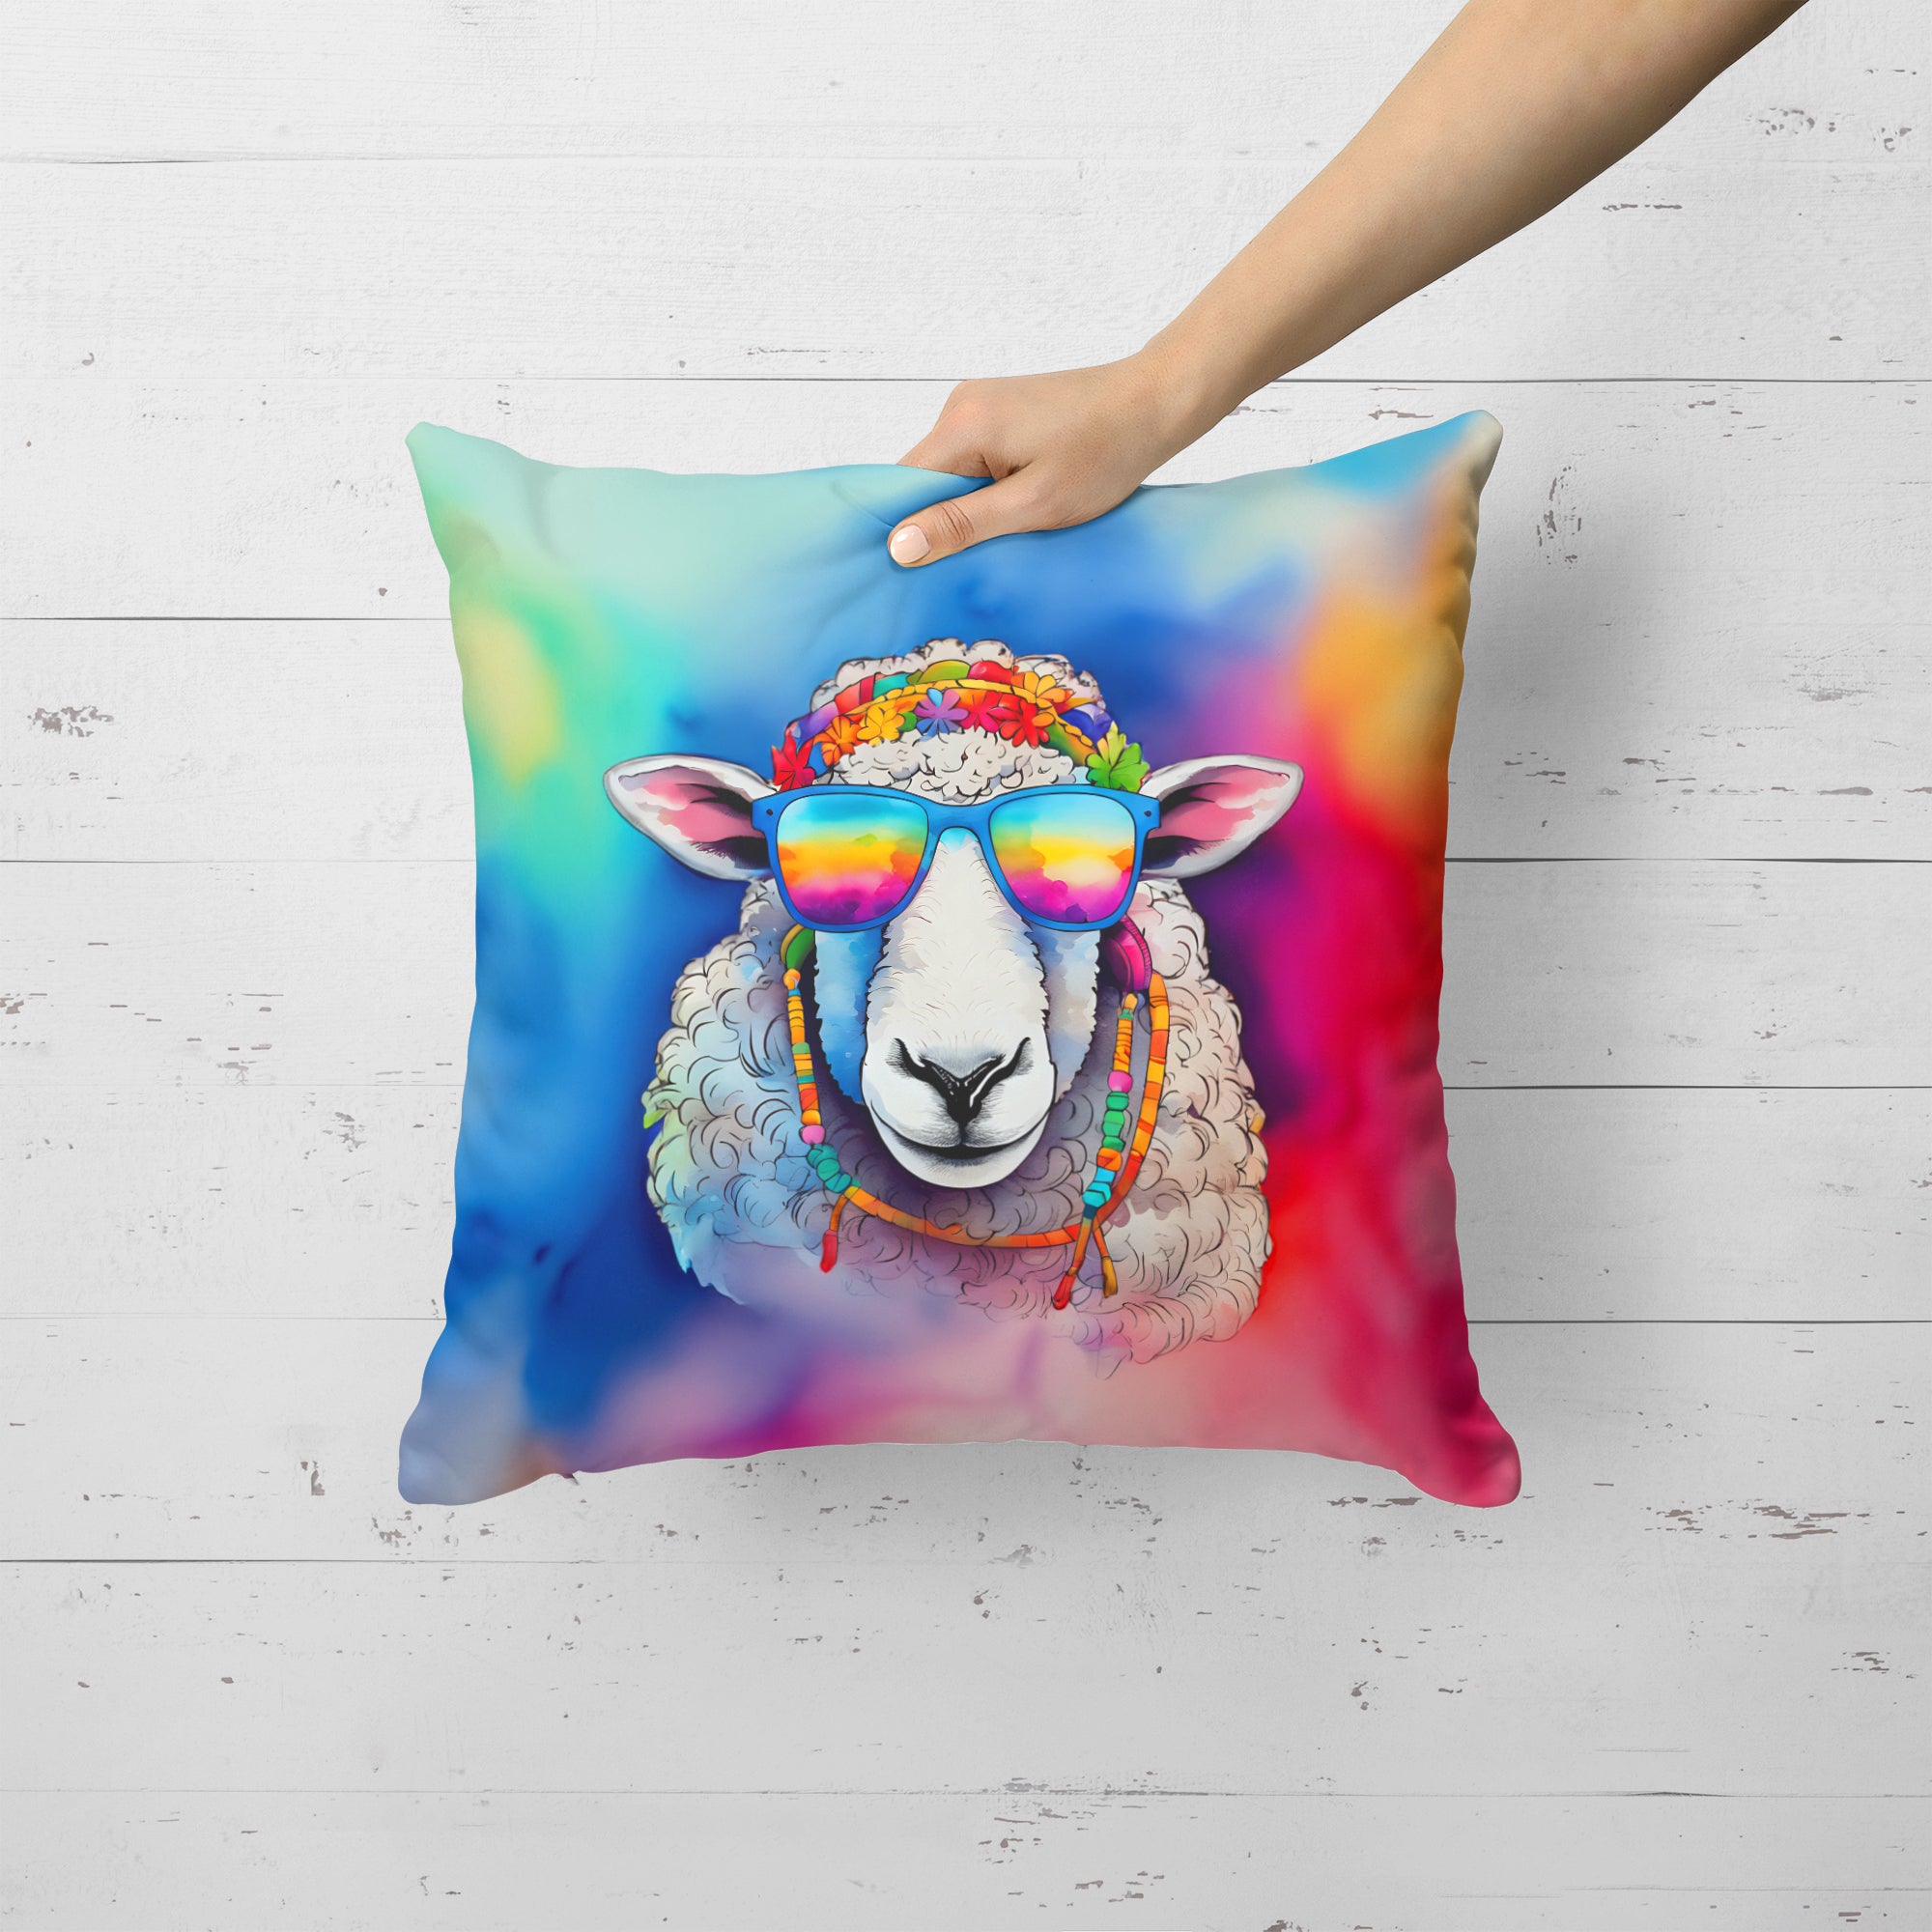 Buy this Hippie Animal Sheep Throw Pillow